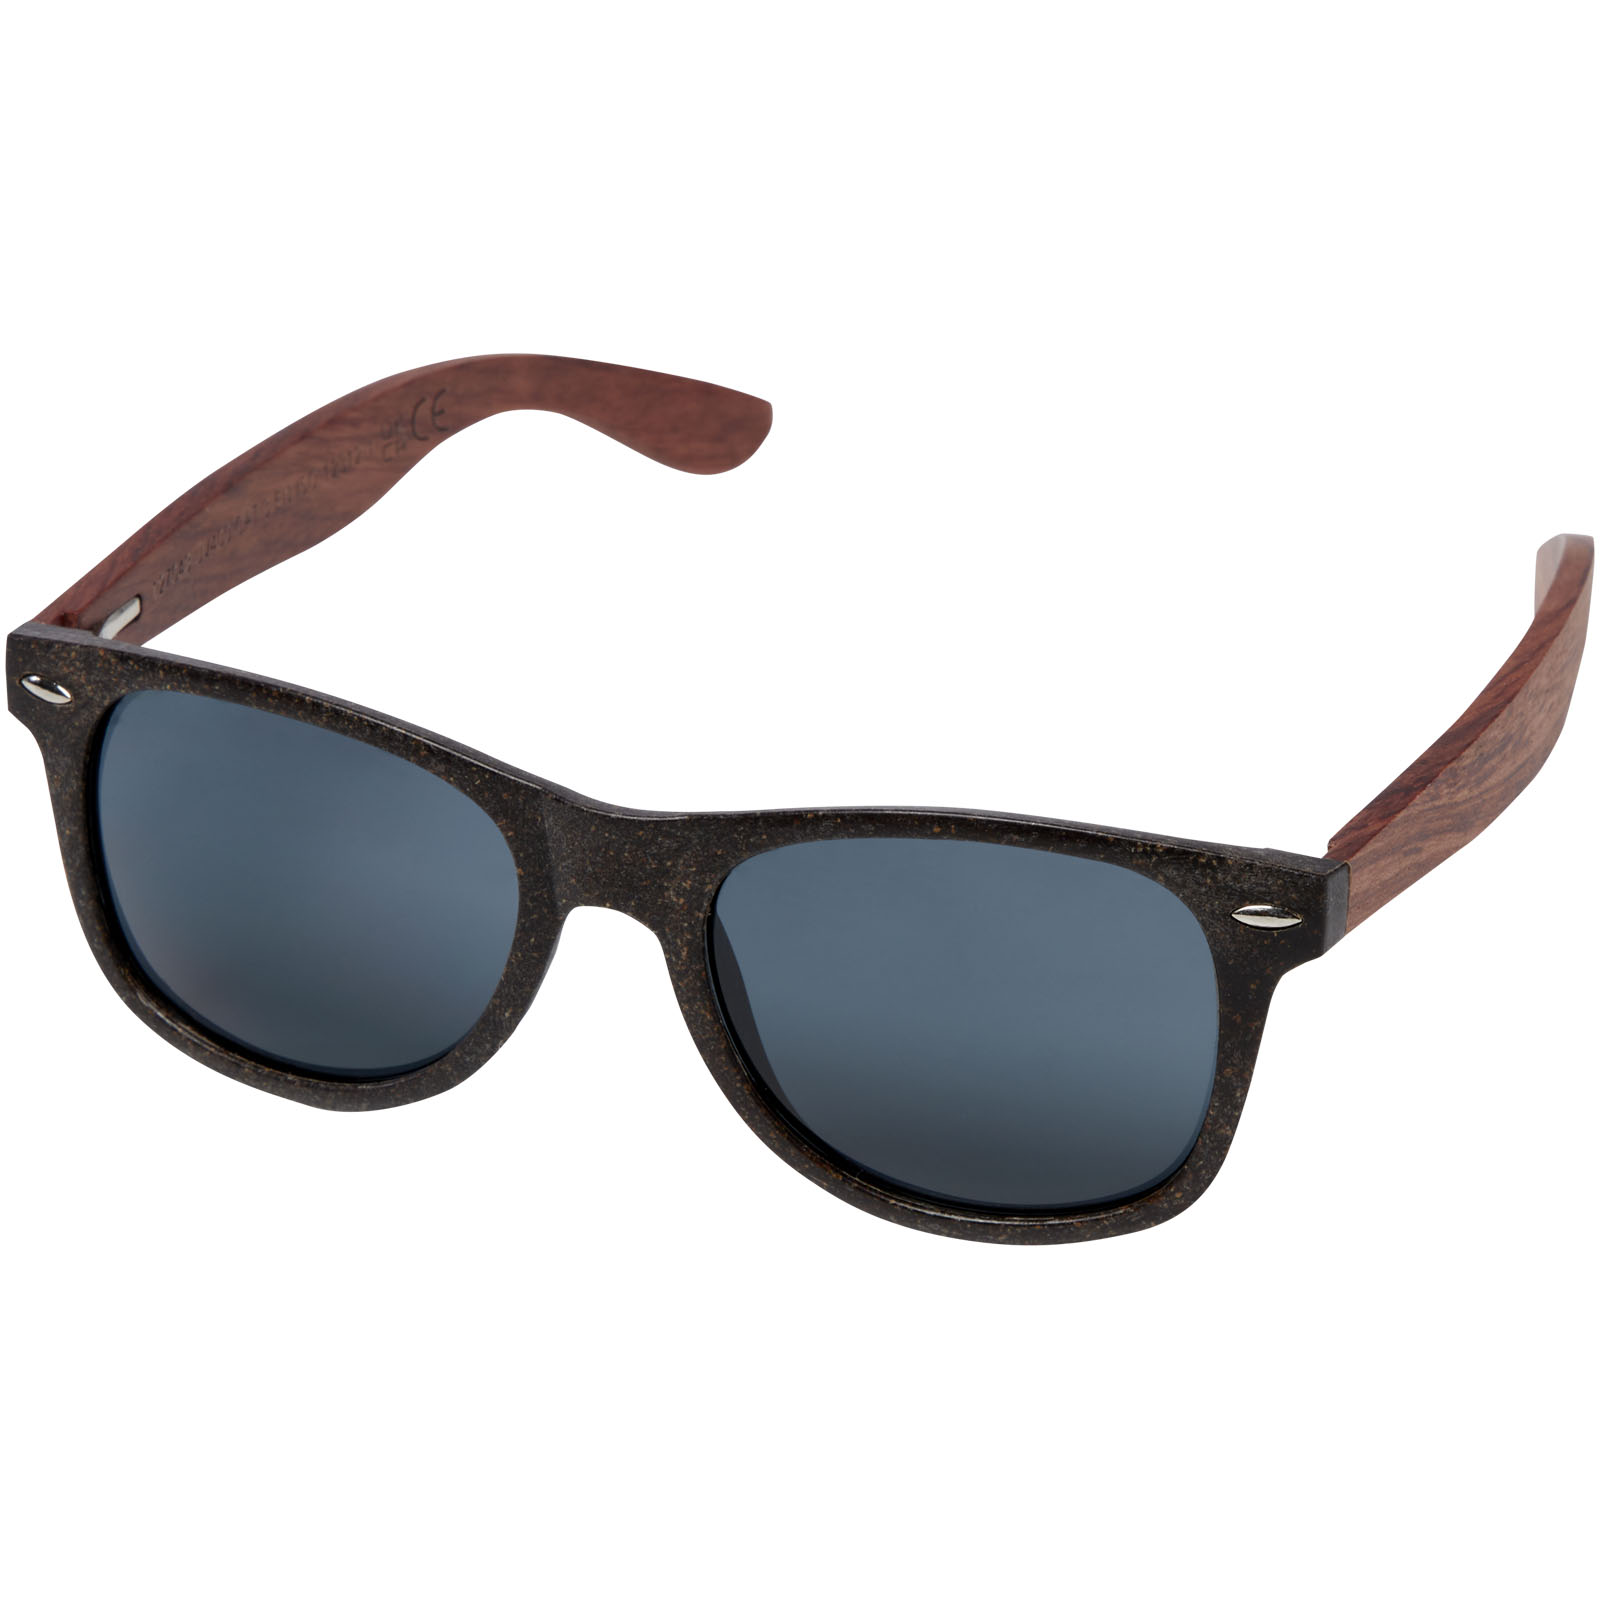 Sunglasses - Kafo sunglasses